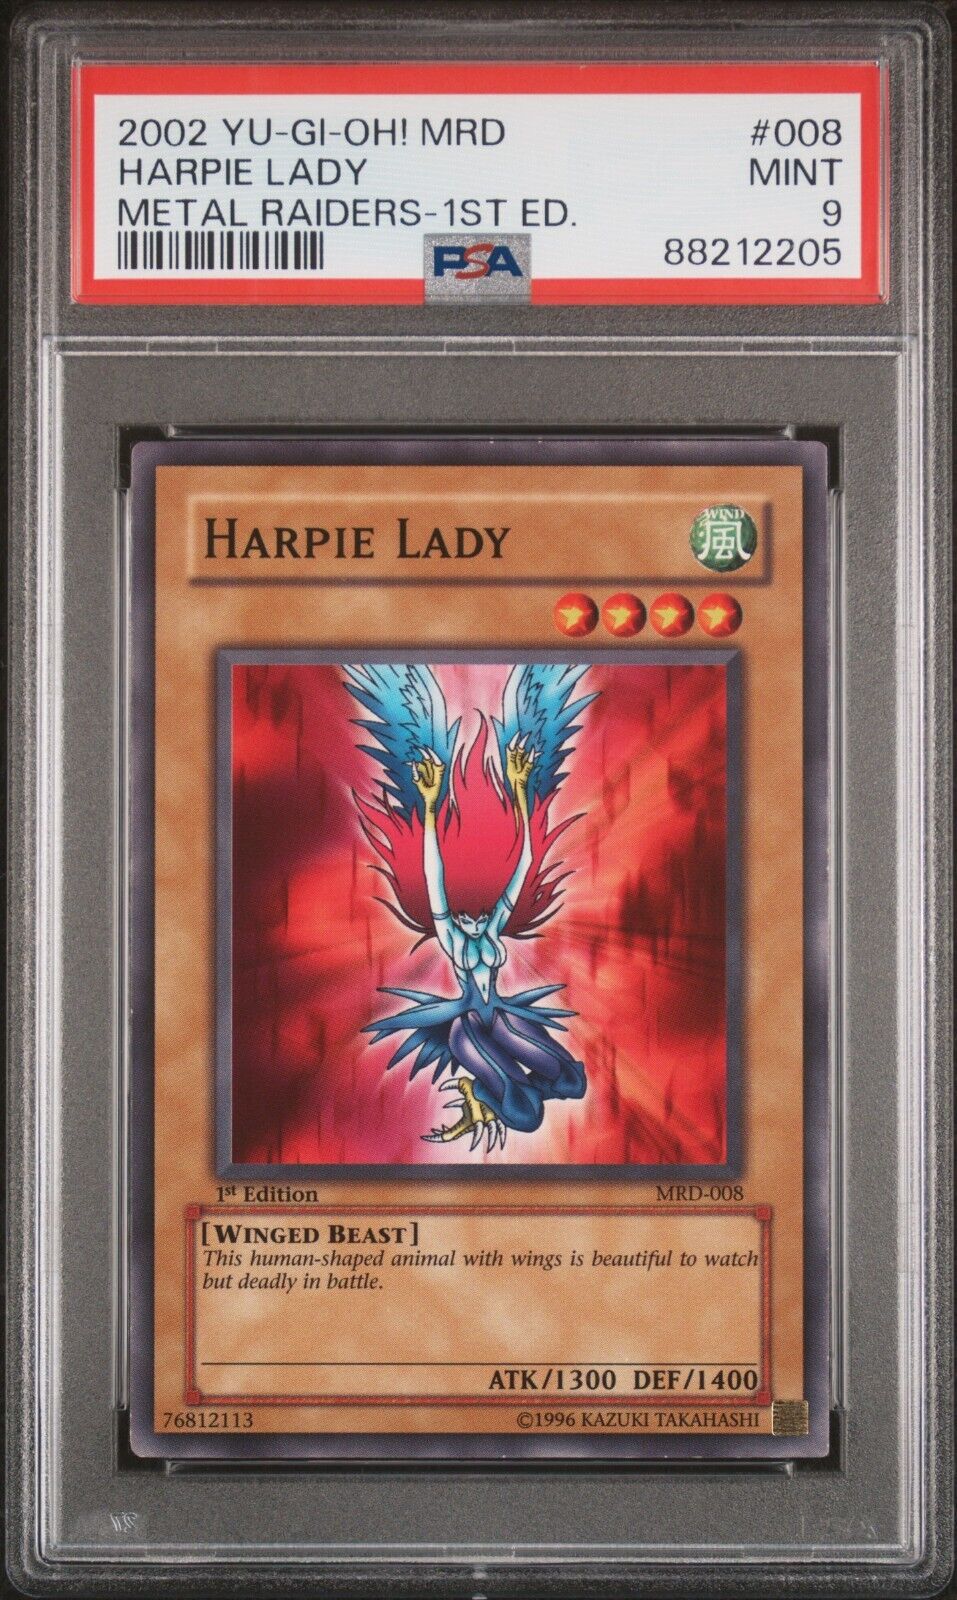 2002 PSA 9 YU-GI-OH Harpie Lady 1st Edition MRD-008 Mint